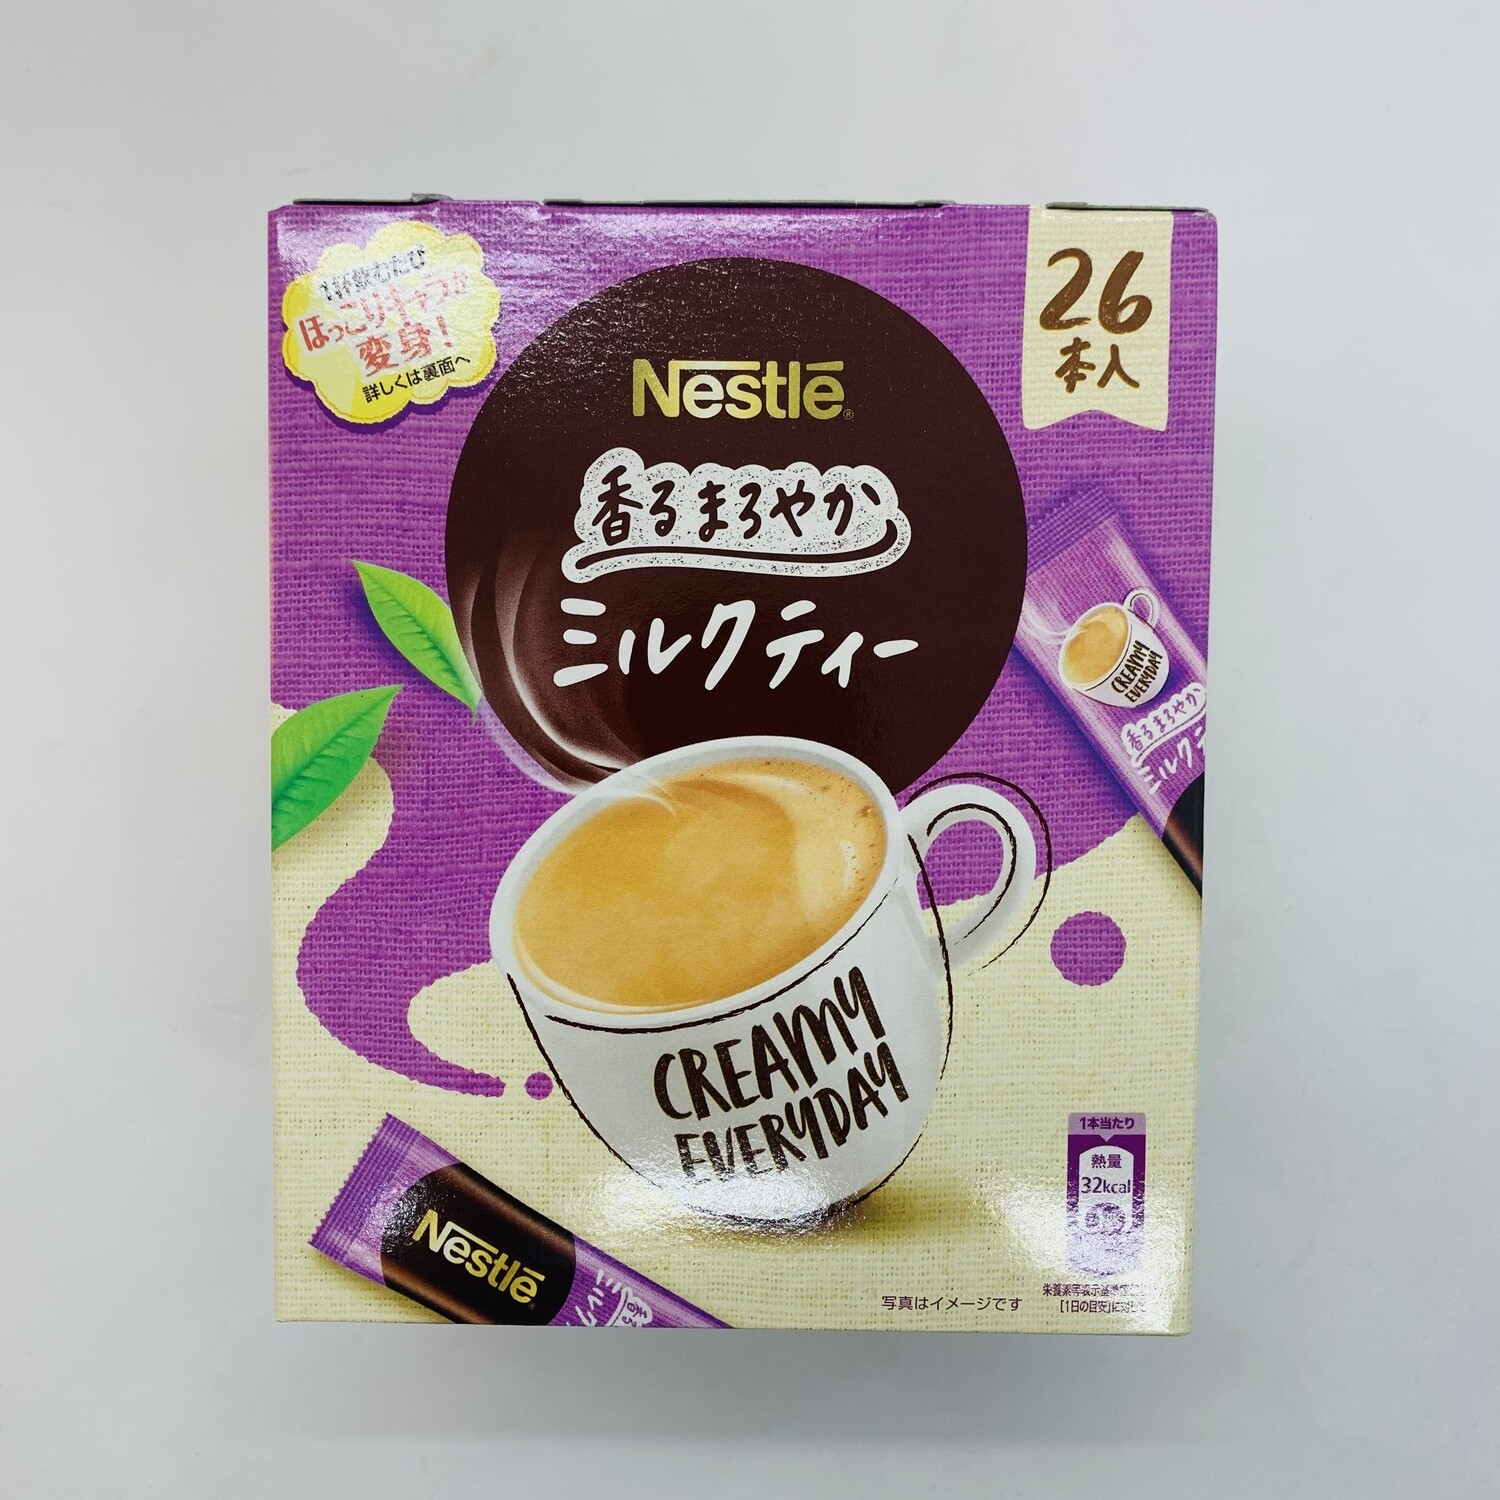 Nestle Creamy Milktea 26 packs